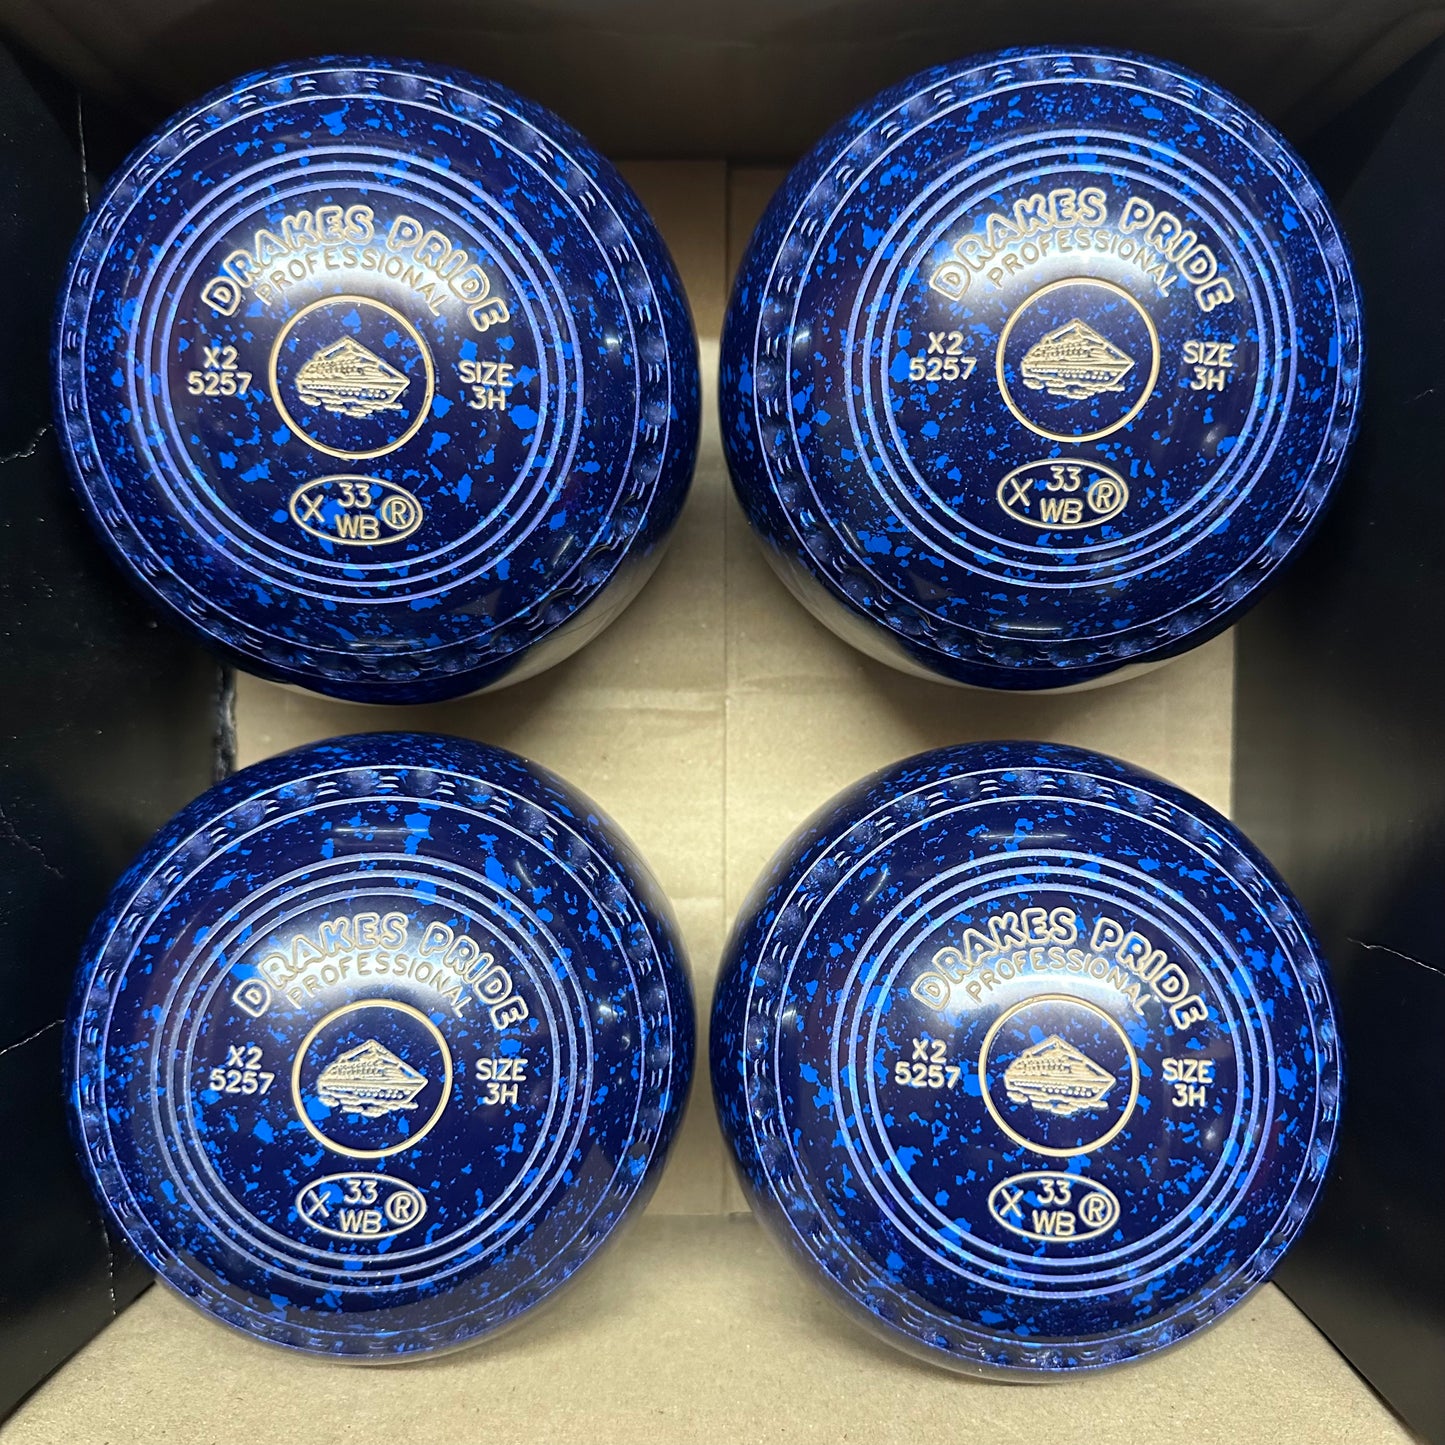 Drakes Pride Professional - Size 3H - Dark Blue/Blue (Grey Rings) - WB33 Stamp